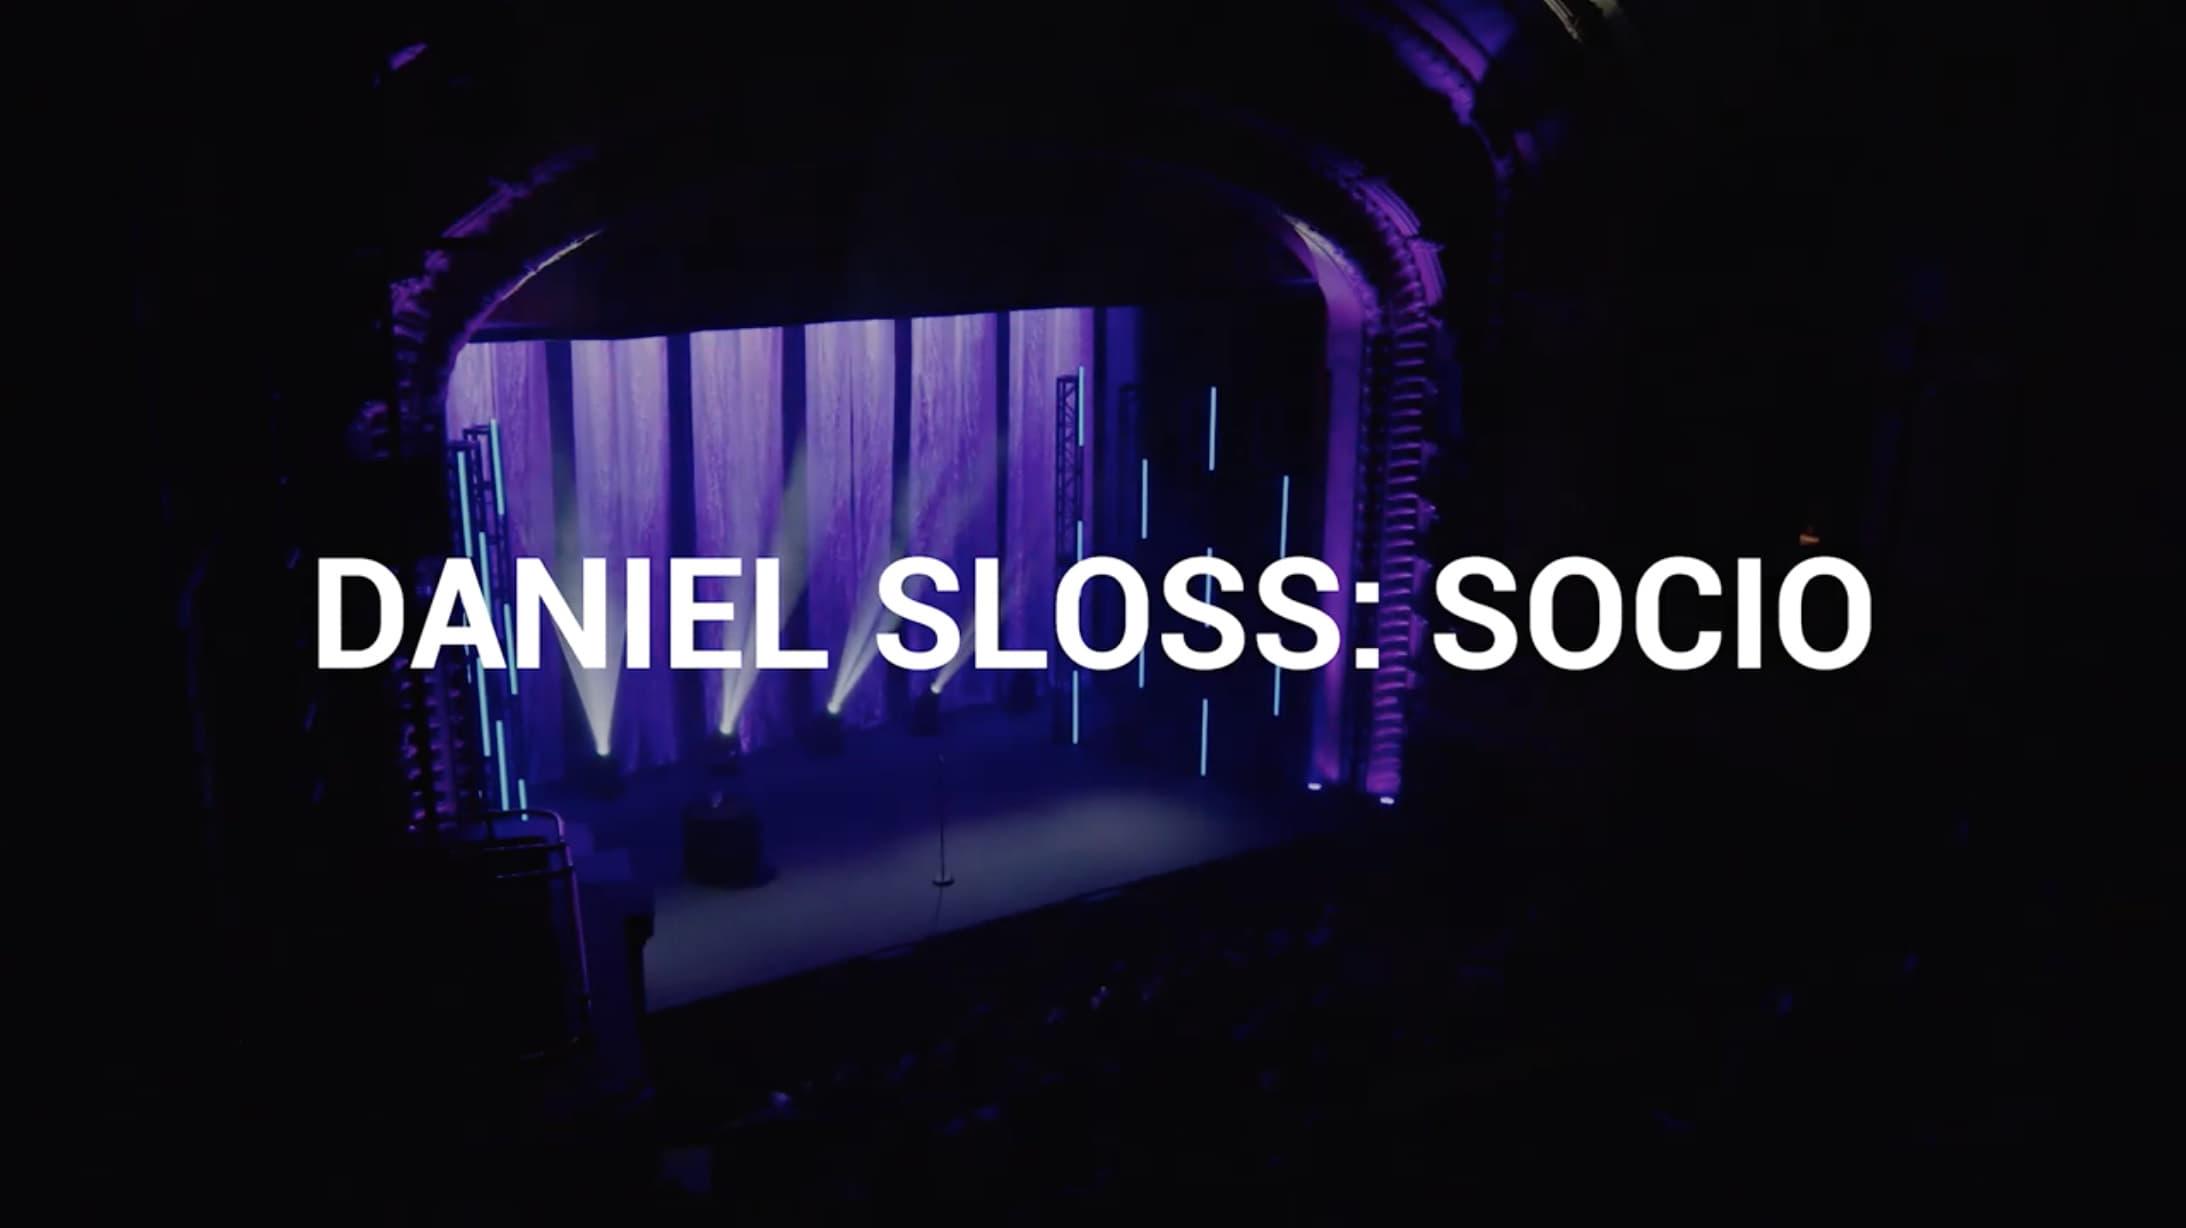 Daniel Sloss: Socio backdrop